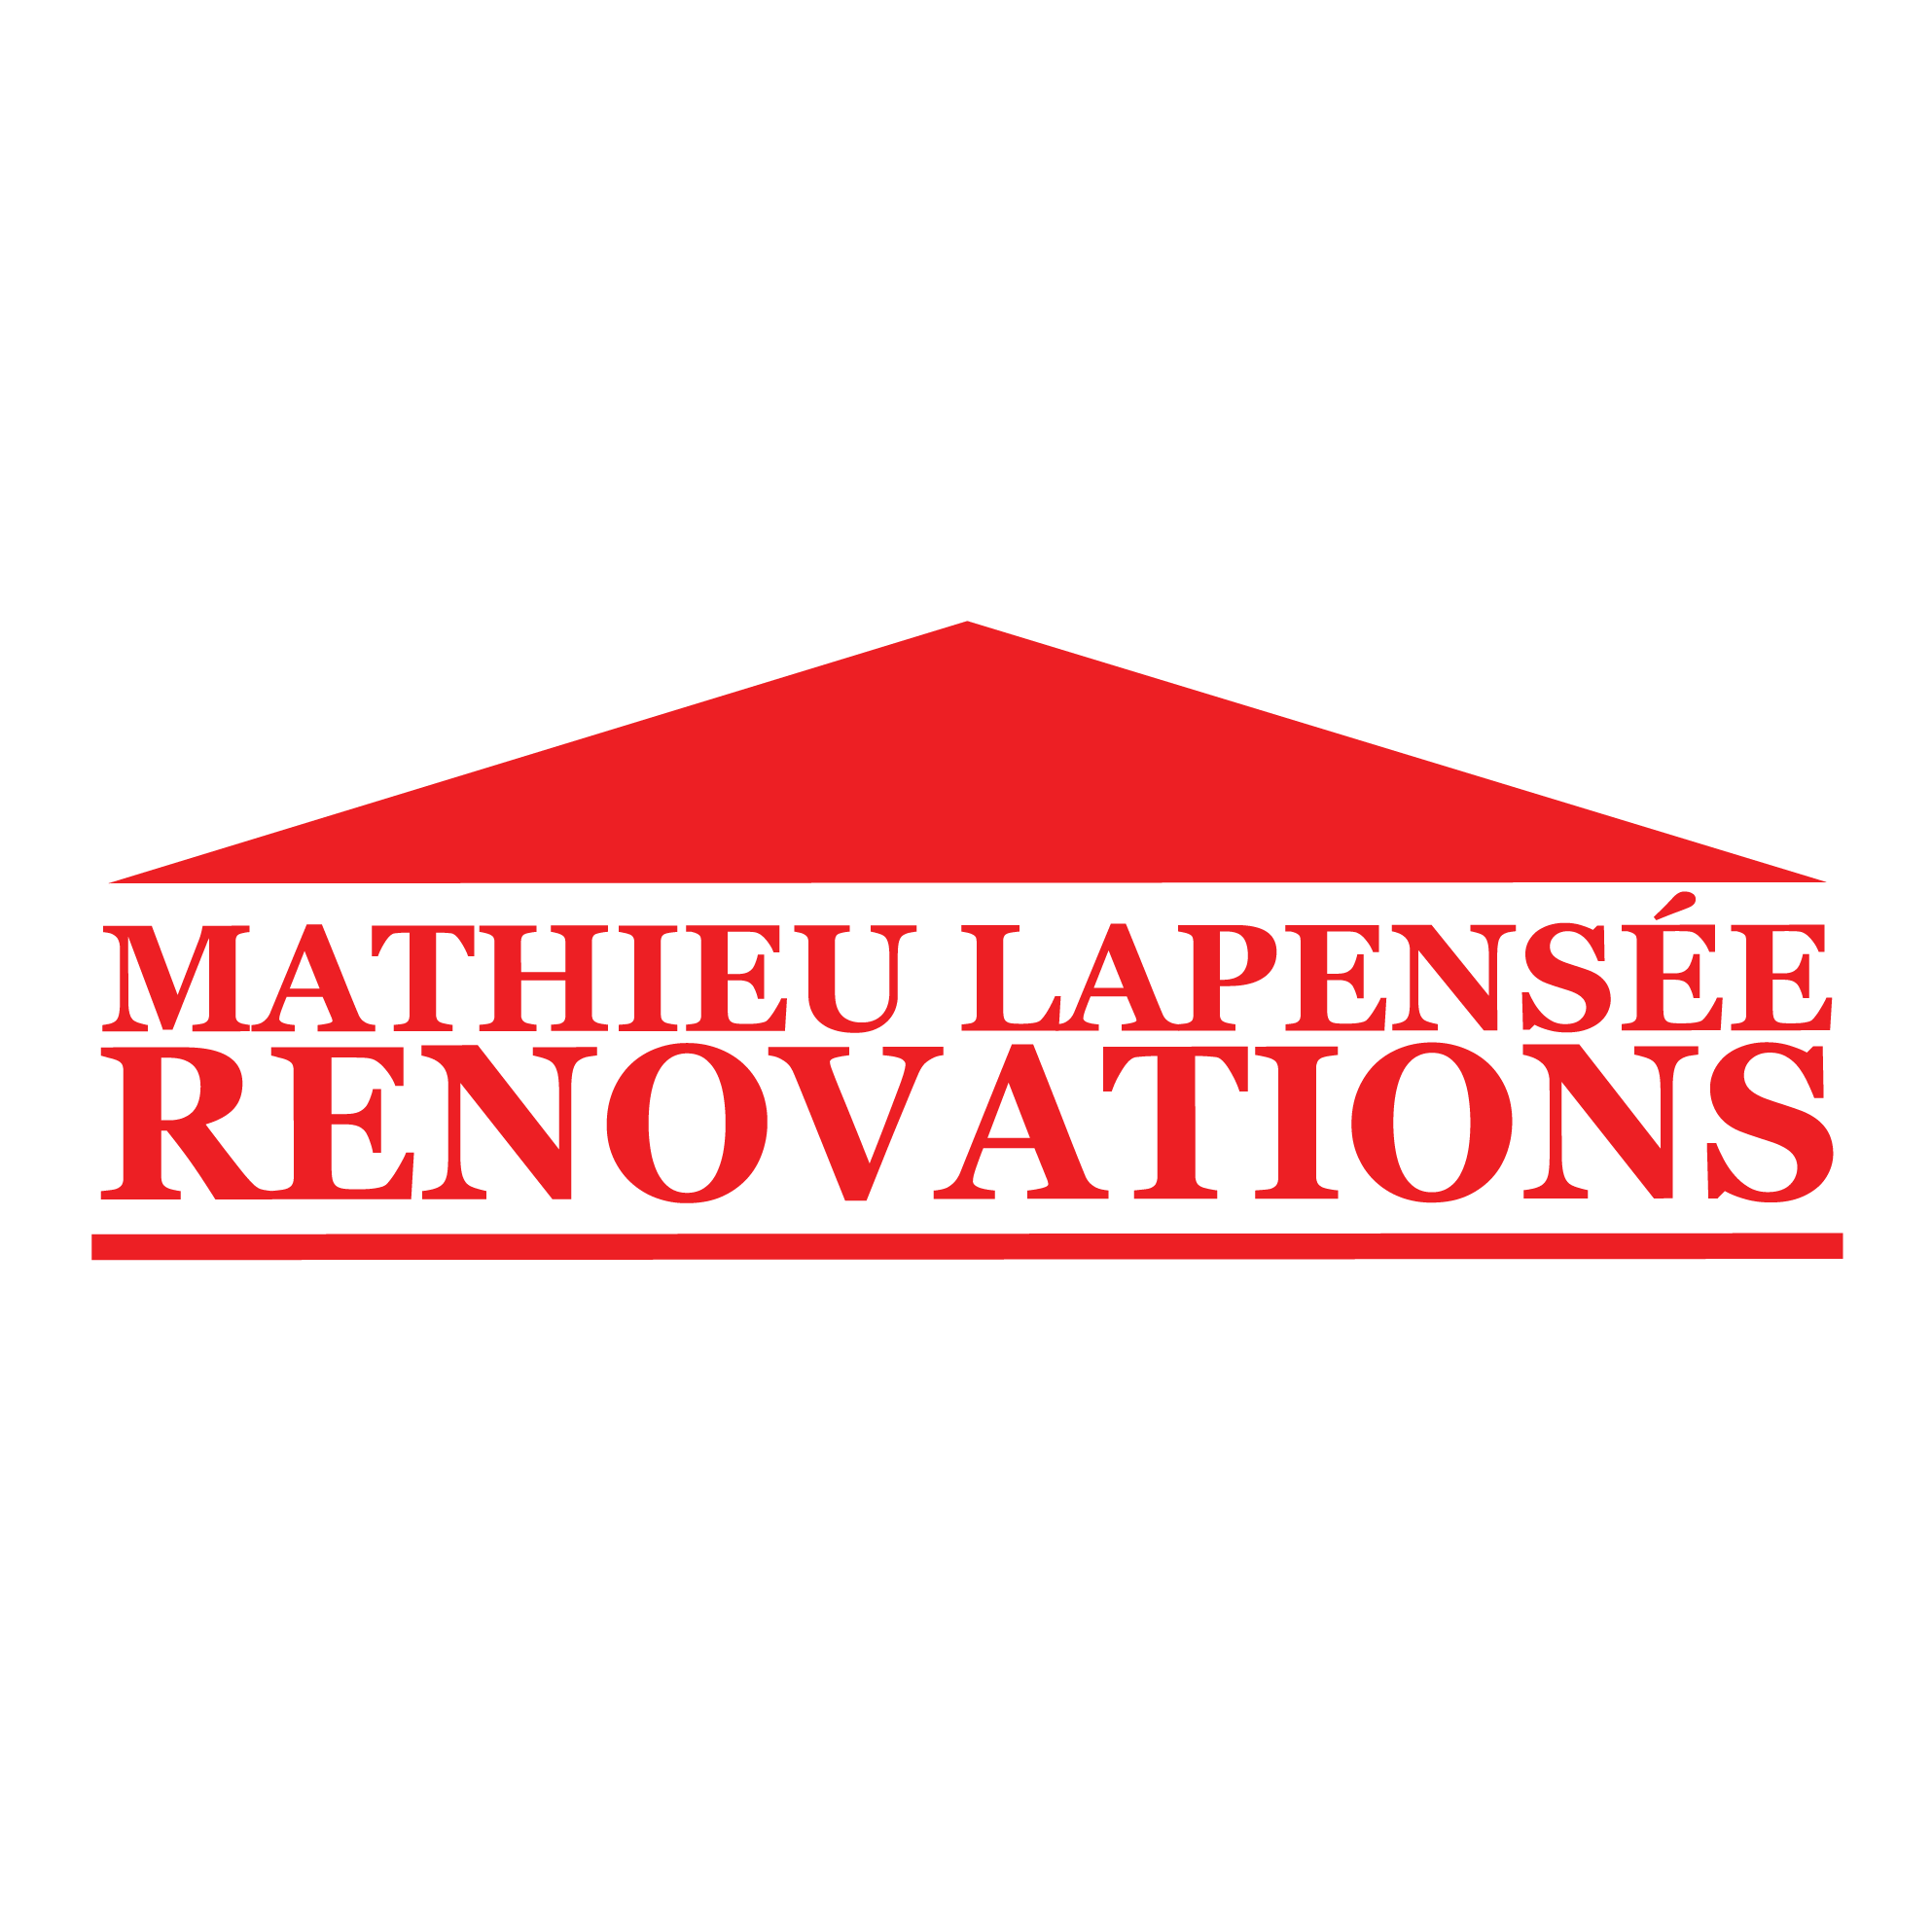 Mathieu Lapensee Renovations